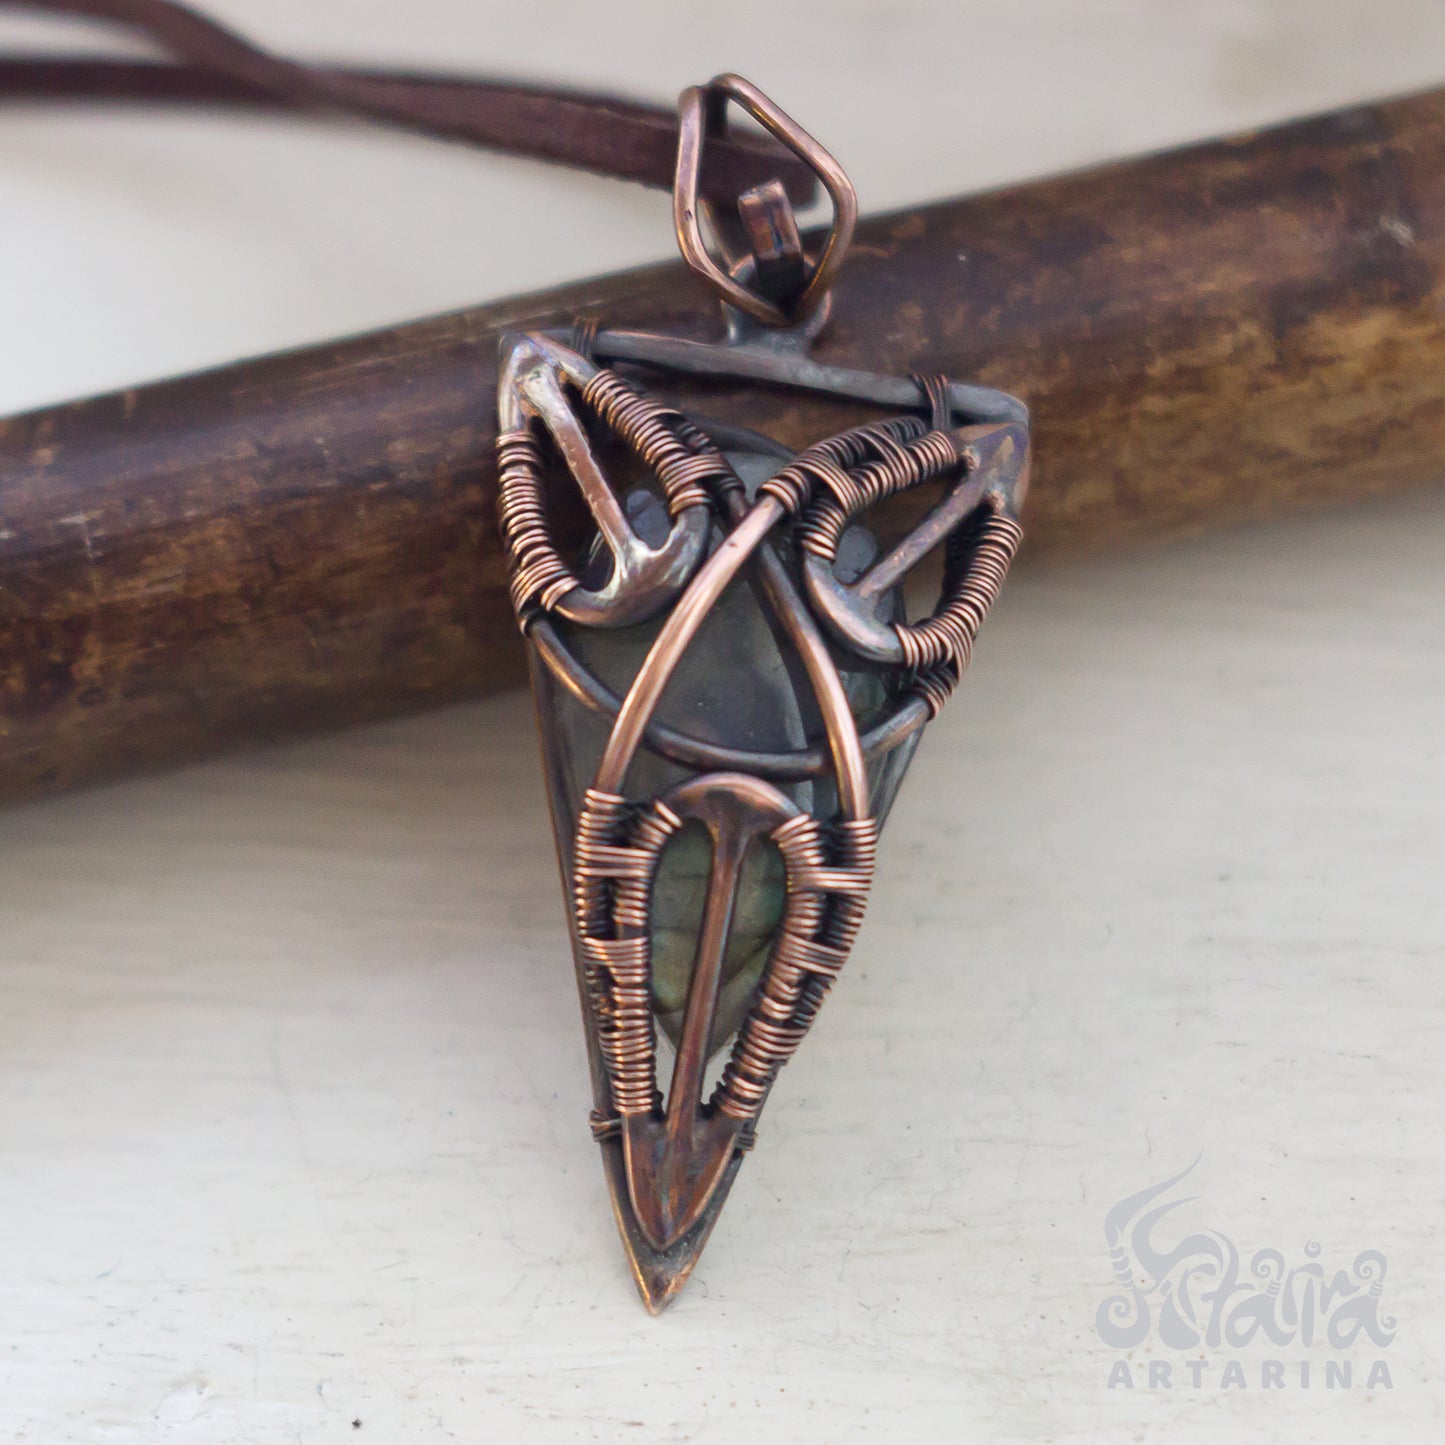 Triangle patina copper wire necklace with labradorite stone